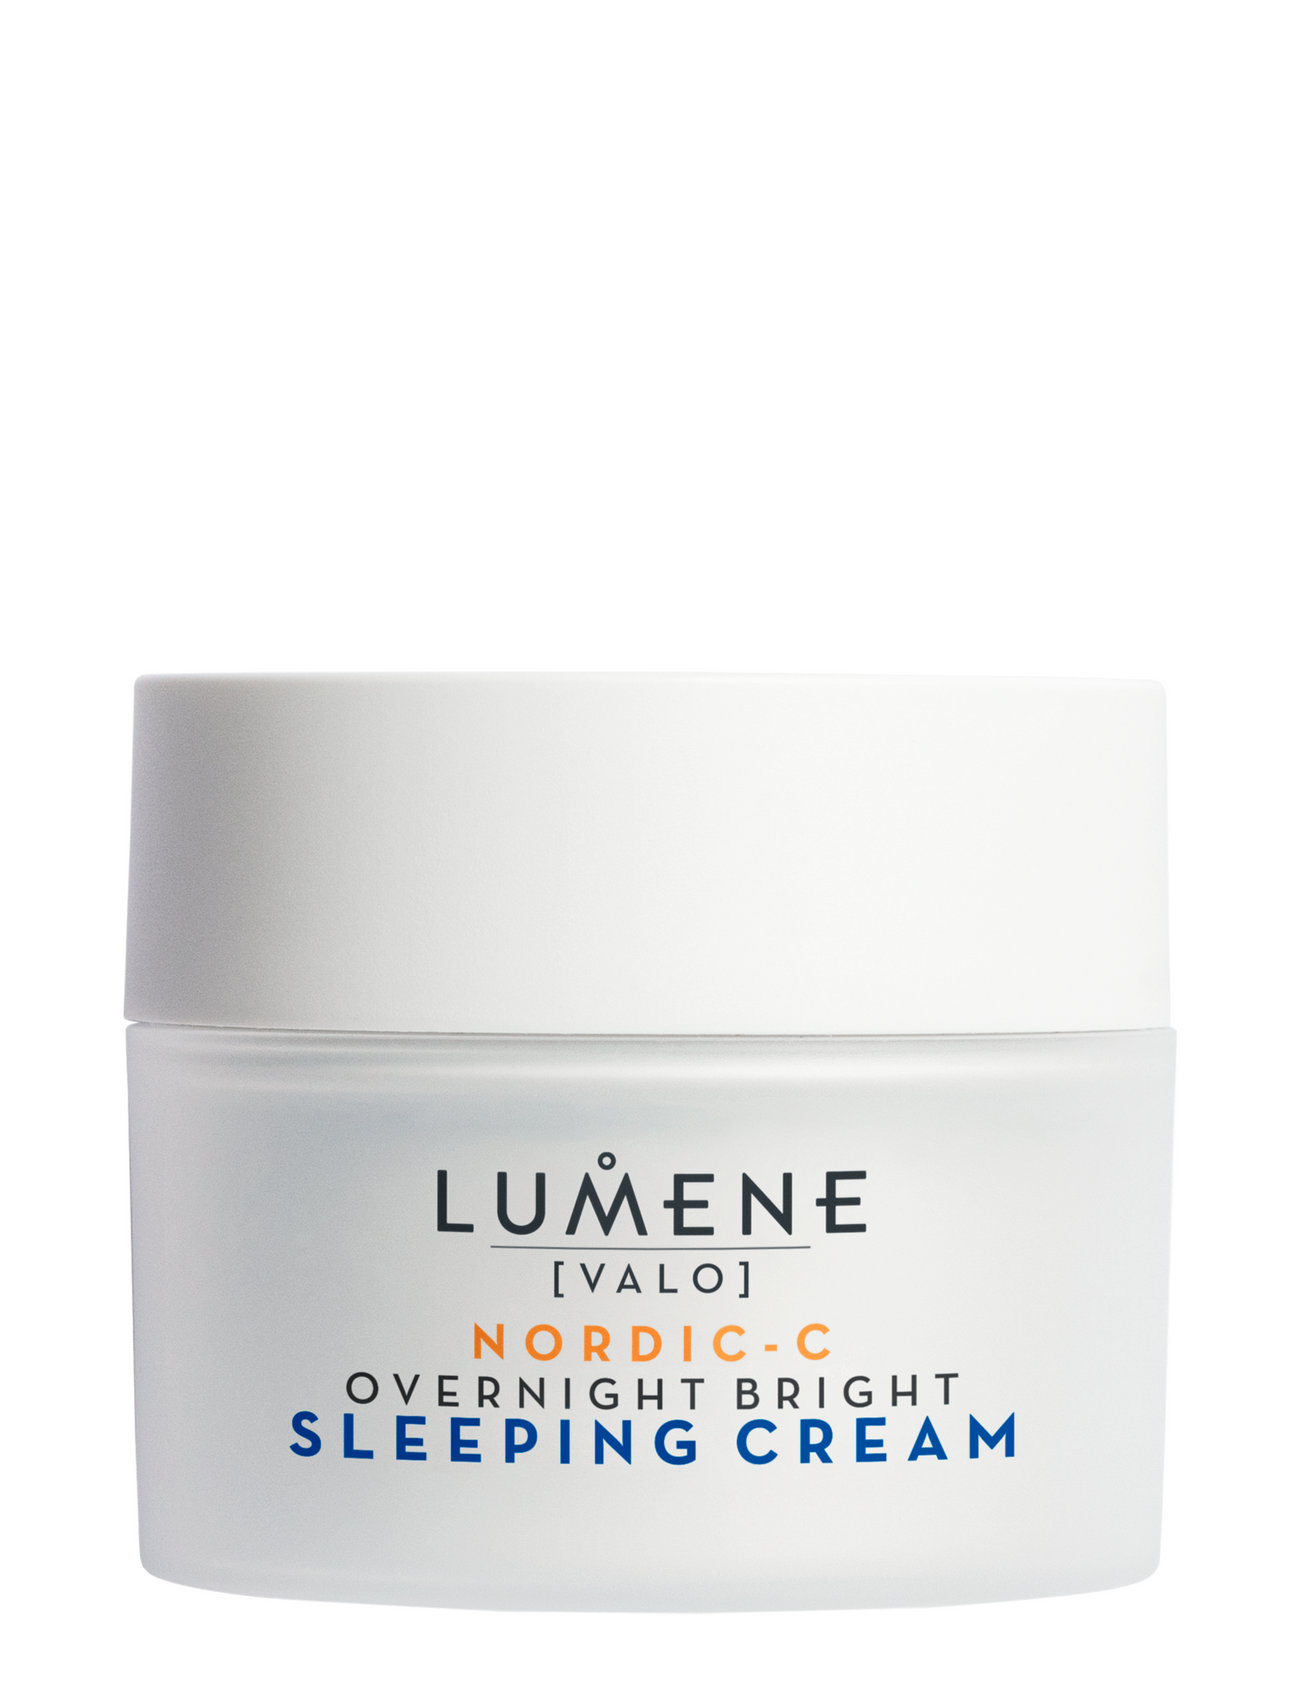 Nordic-C Overnight Bright Sleeping Cream Beauty Women Skin Care Face Moisturizers Night Cream Nude LUMENE